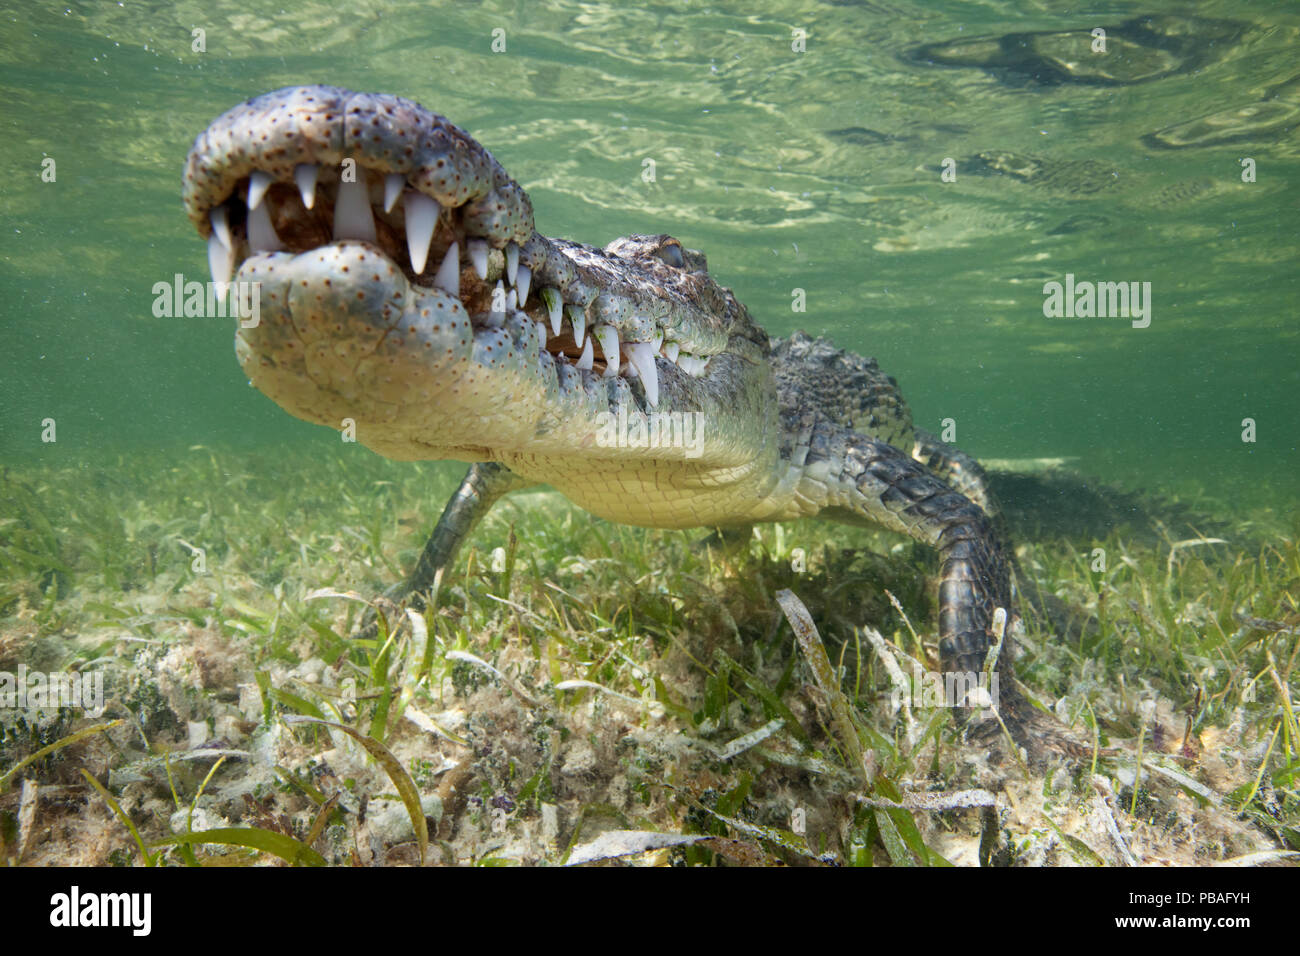 American crocodile (Crocodylus acutus) resting just above seagrass underwater, Banco Chinchorro Biosphere Reserve, Caribbean region, Mexico Stock Photo